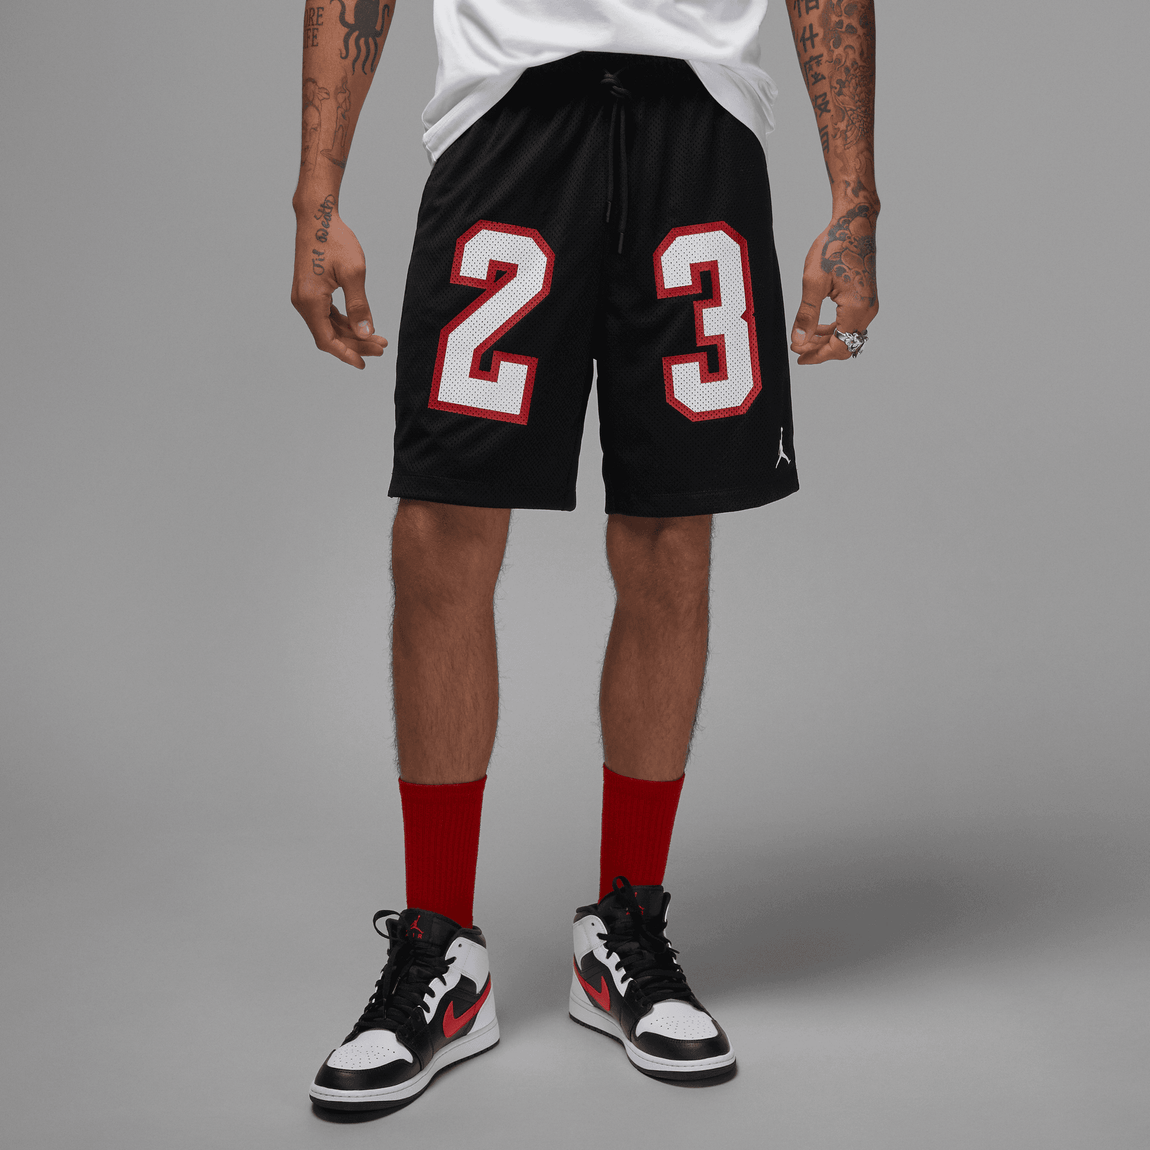 Jordan Essentials Shorts (Black/White-Red) - Jordan Essentials Shorts (Black/White-Red) - 